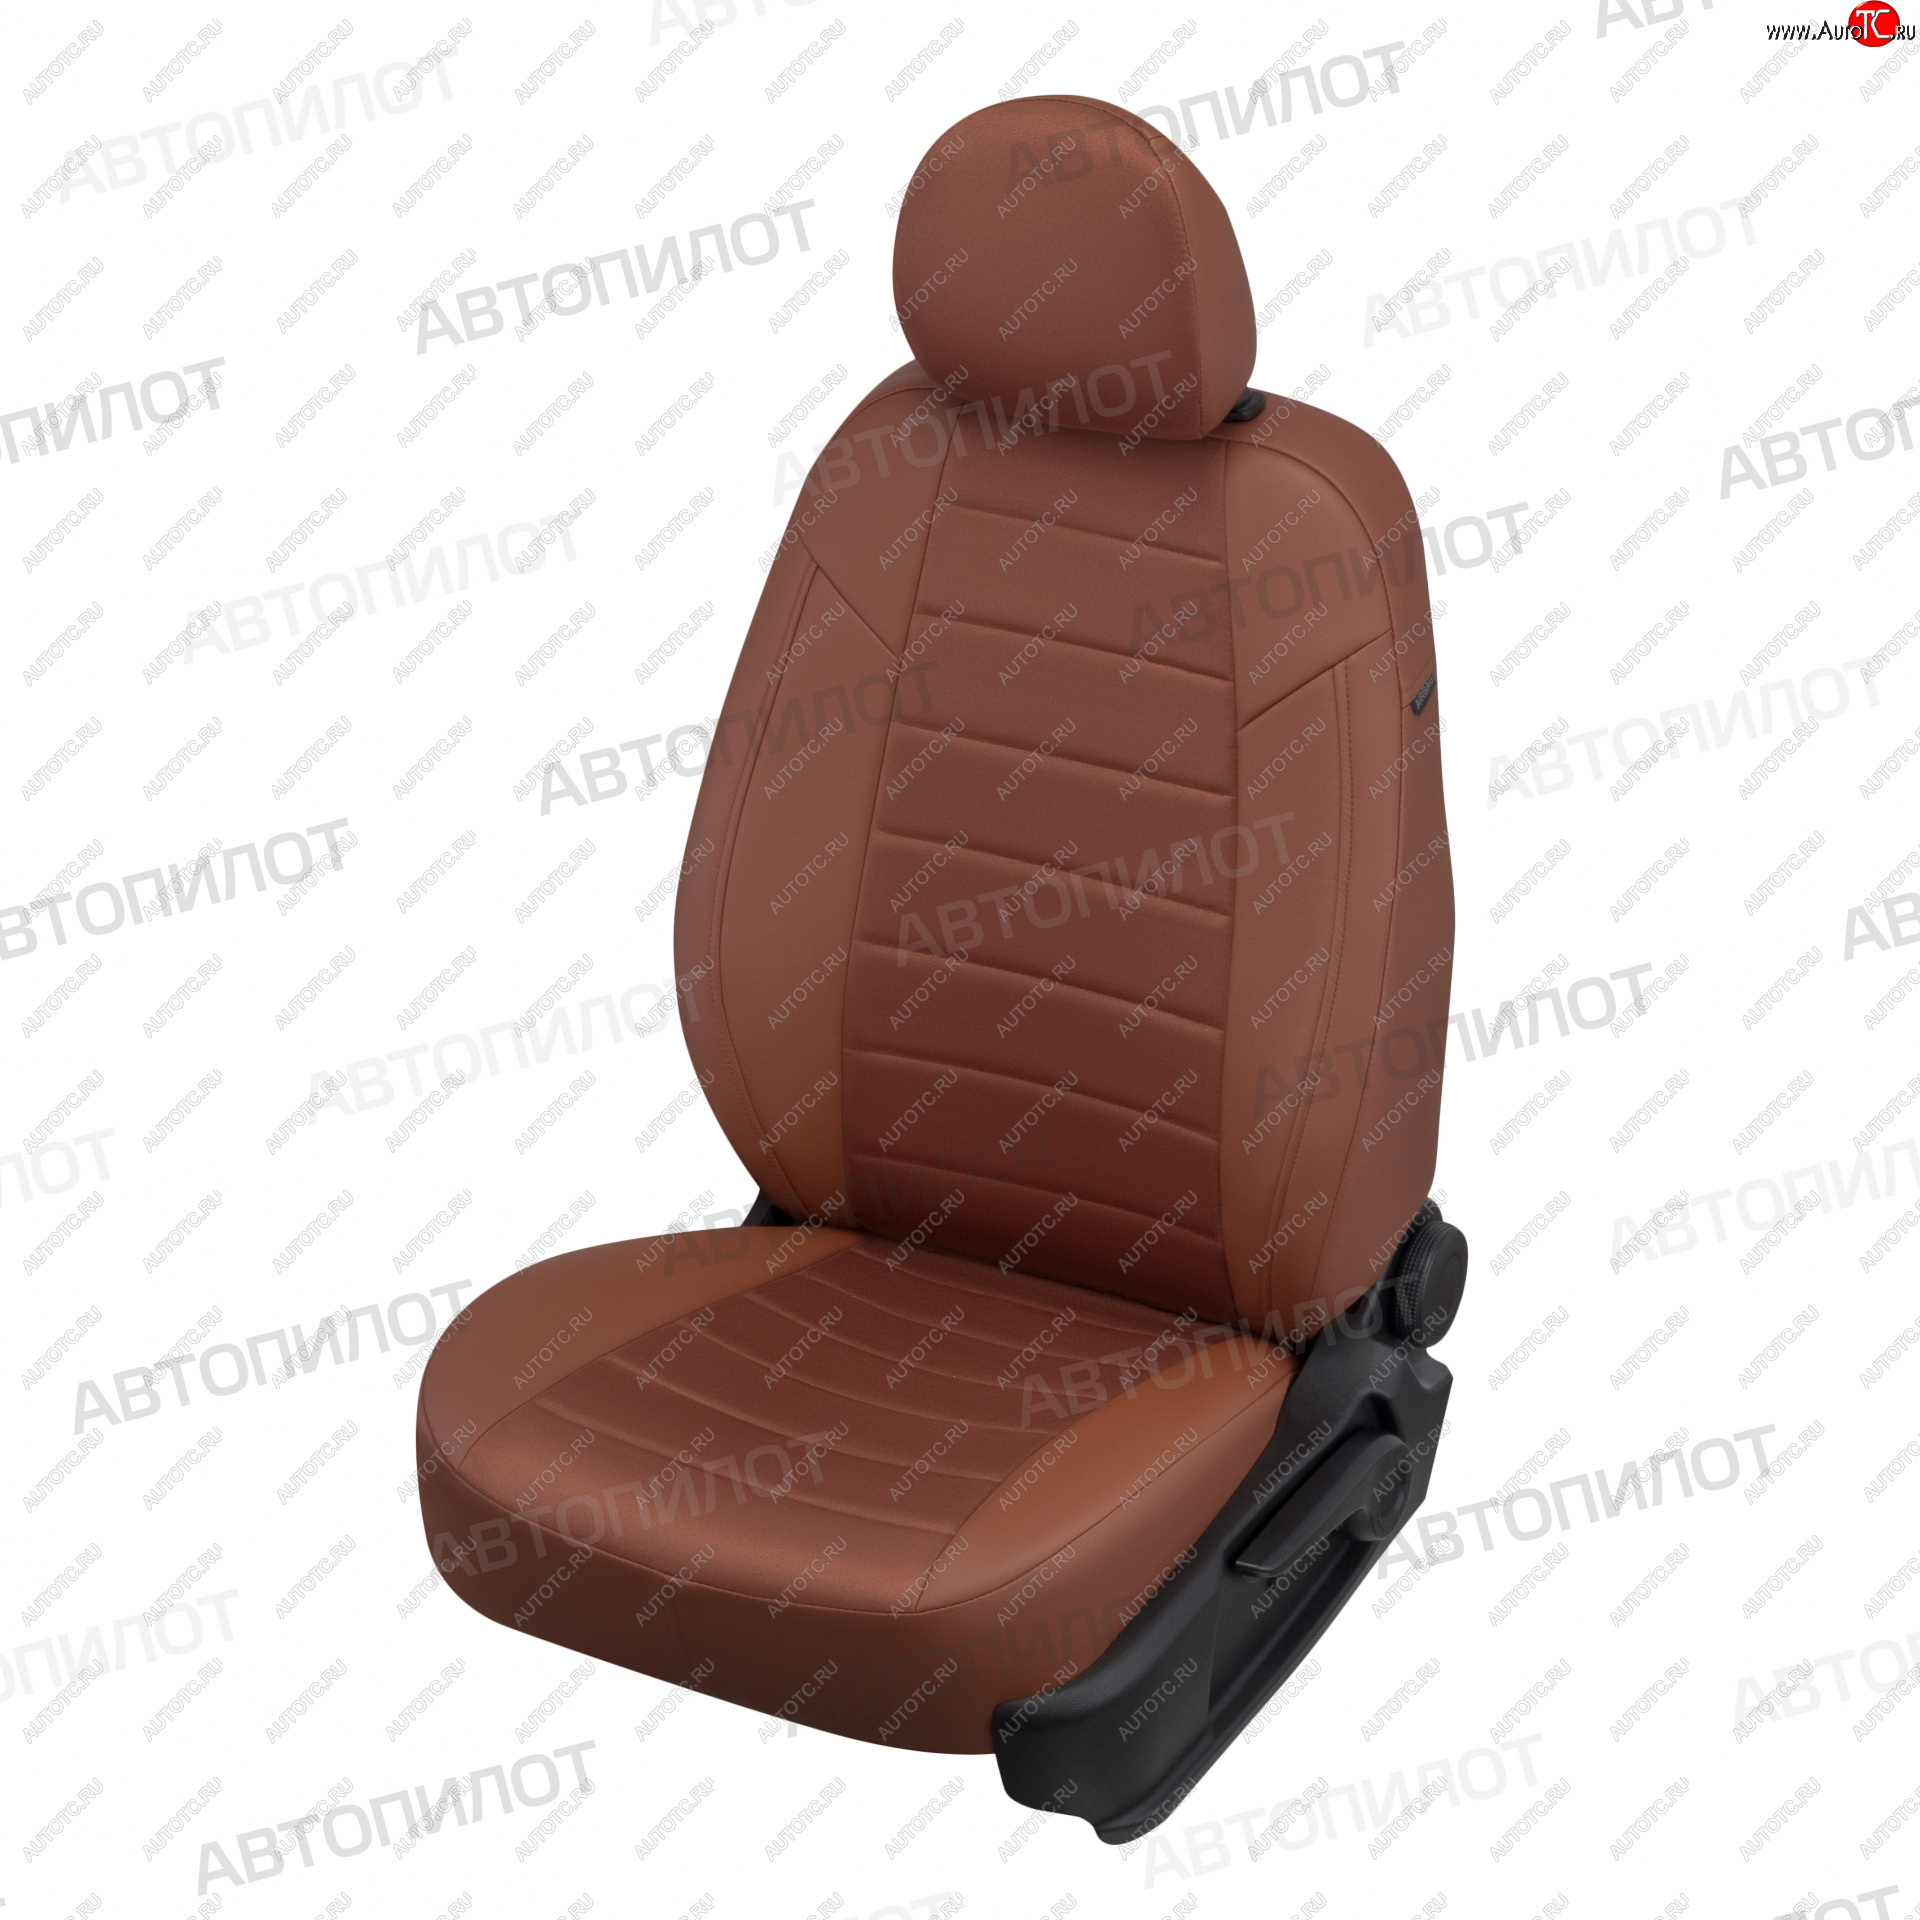 13 449 р. Чехлы сидений (экокожа/алькантара) Автопилот  Hyundai Sonata  NF (2004-2010) (коричневый)